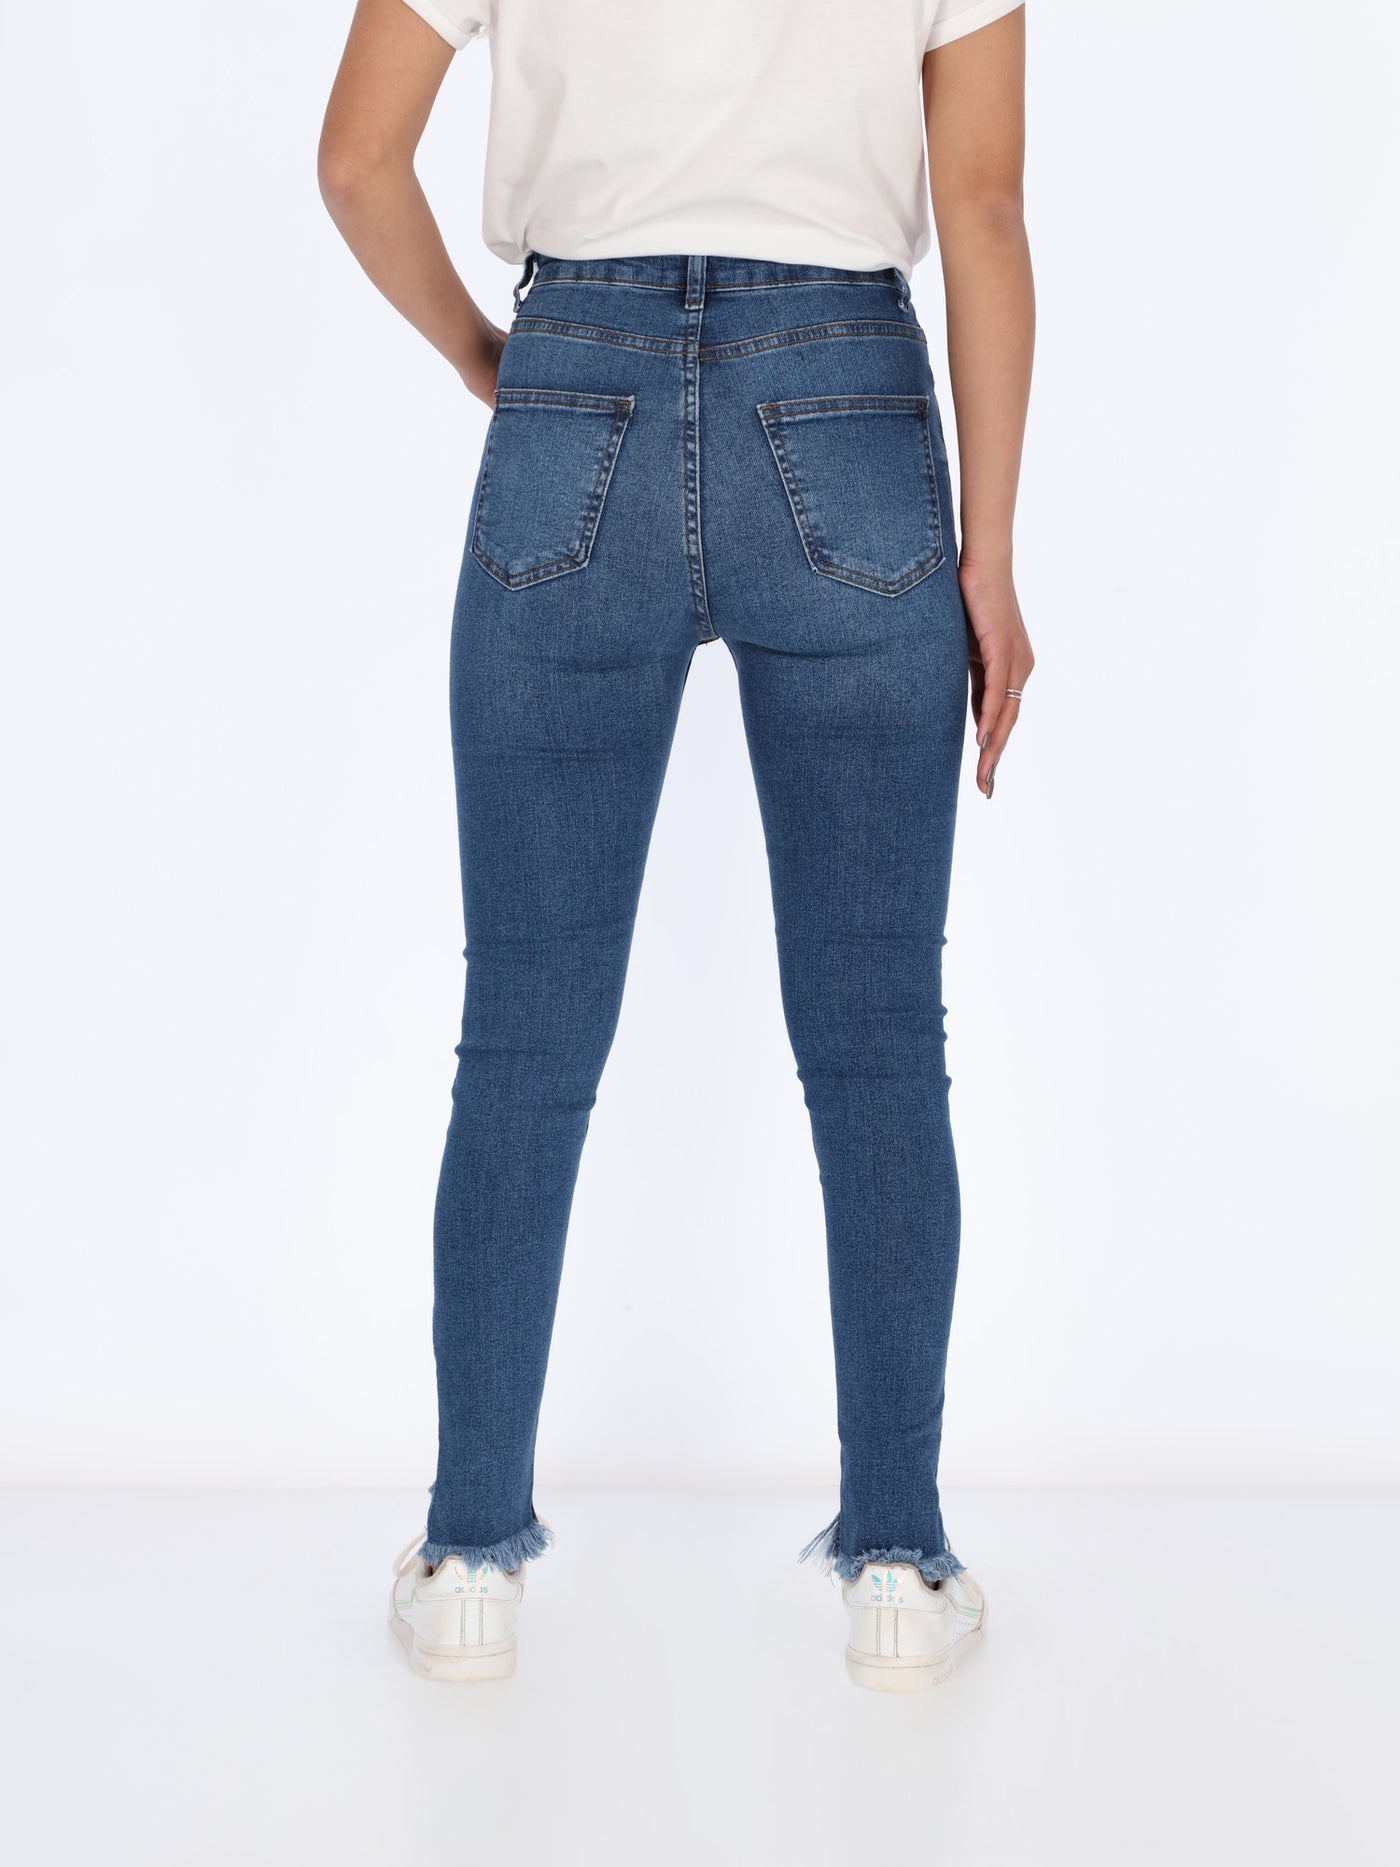 OR Women's Raw Hem Skinny Jeans